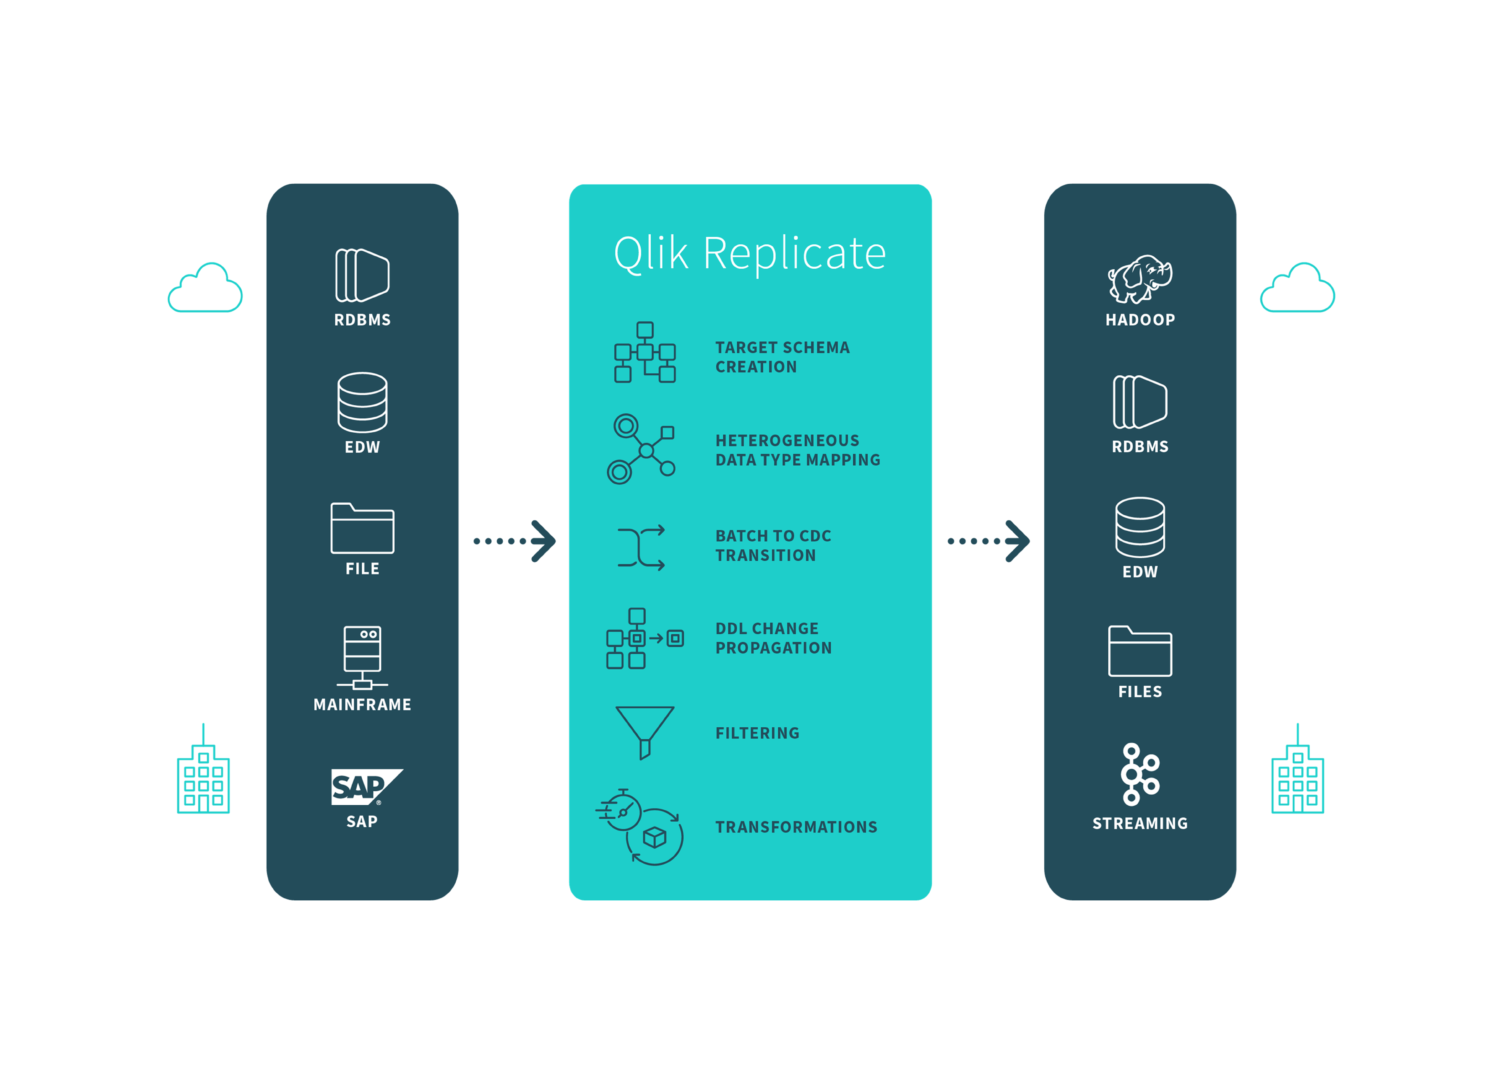 Qlik Replicate capabilities as a data integration platform